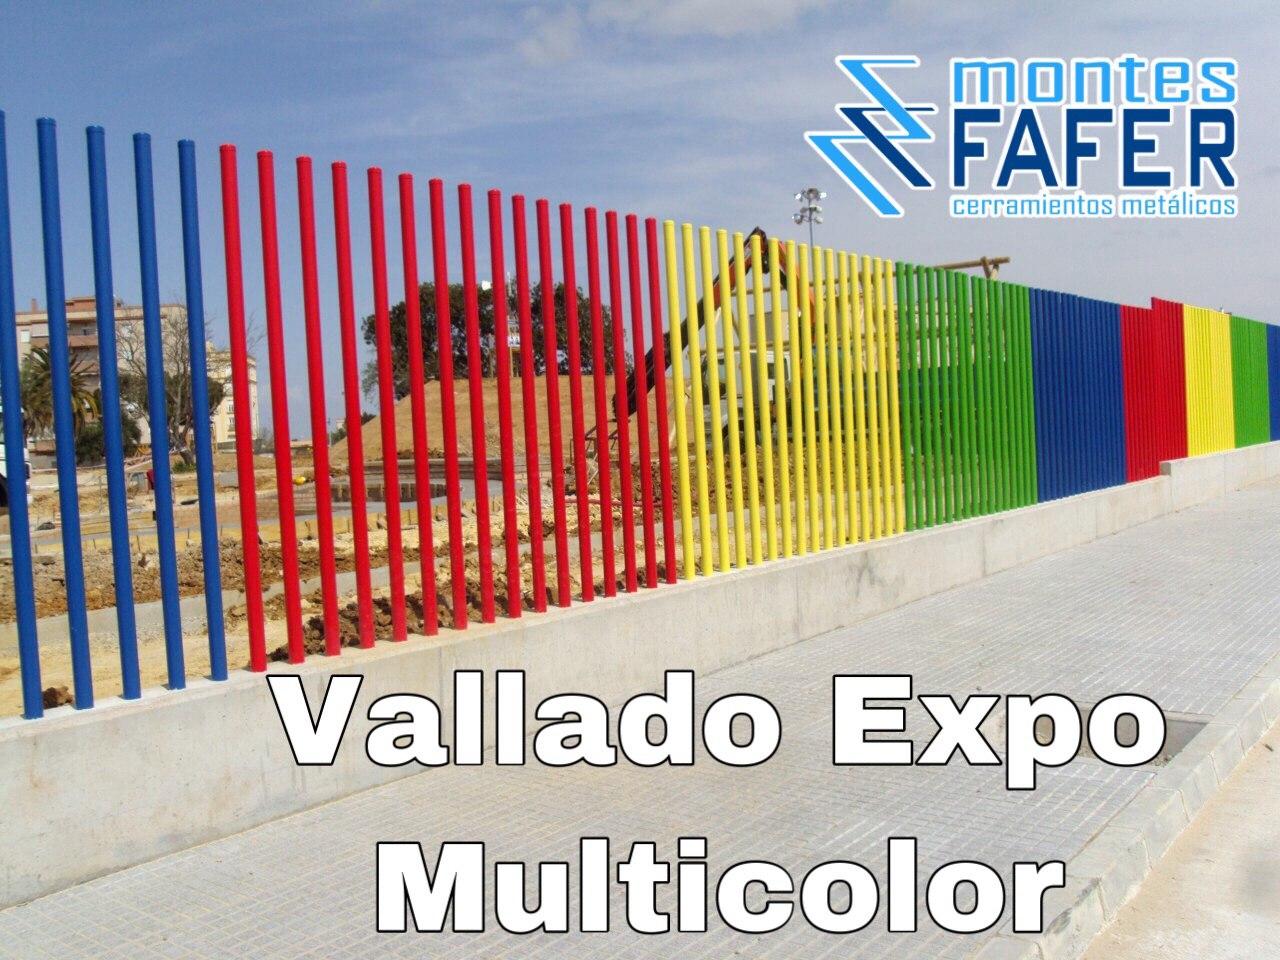 Verja expo multicolor MontesFafer